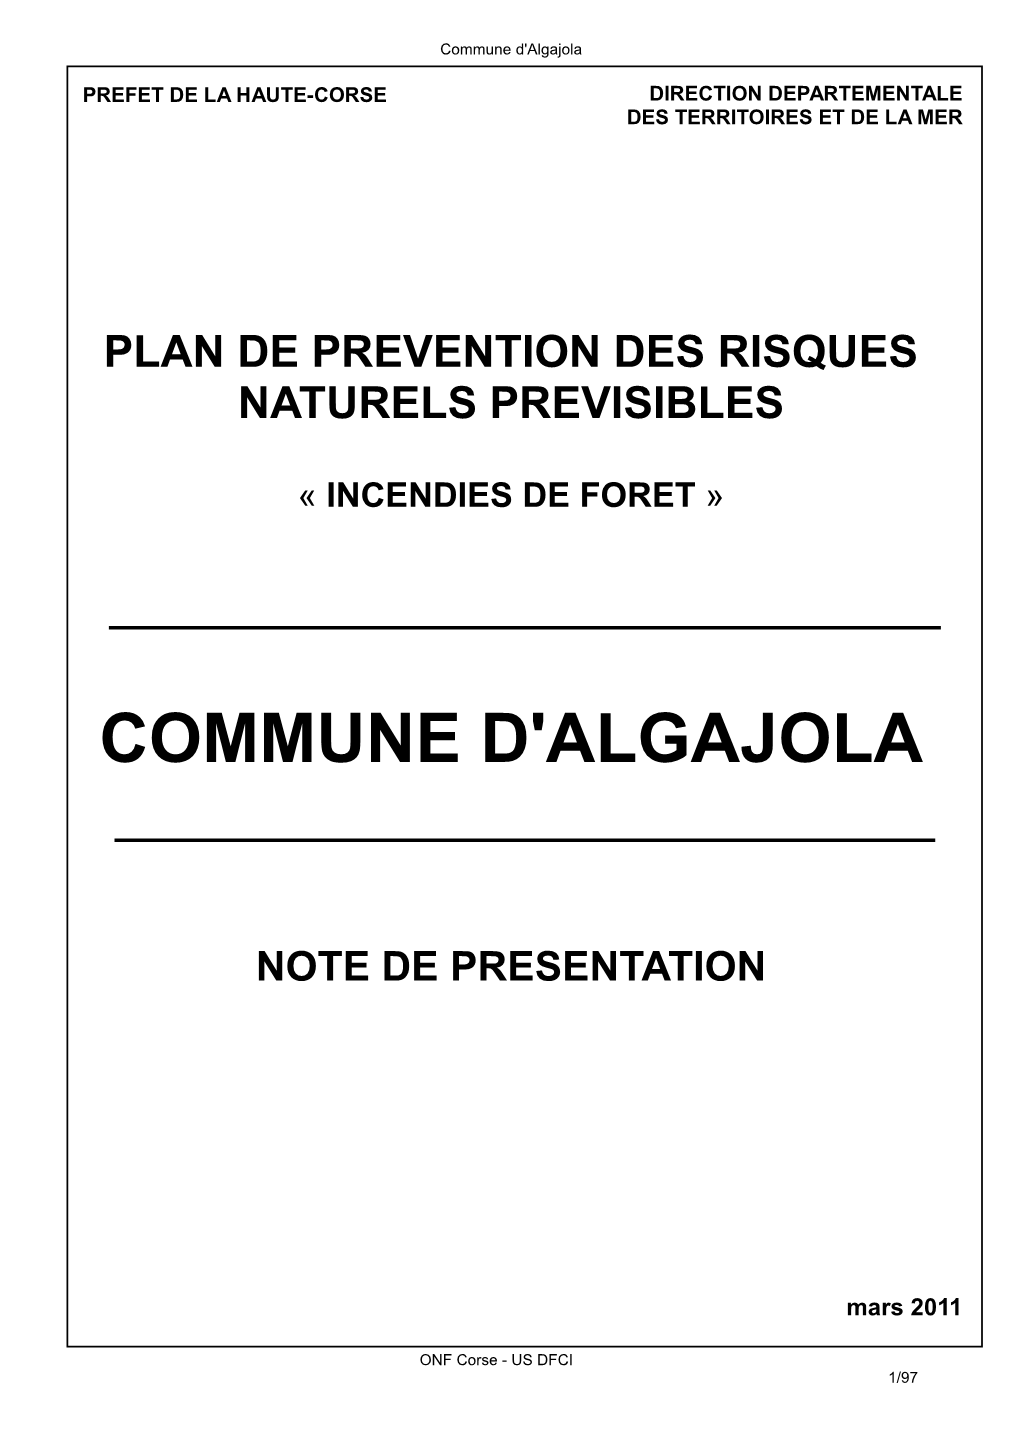 Presentation De La Commune D'algajola